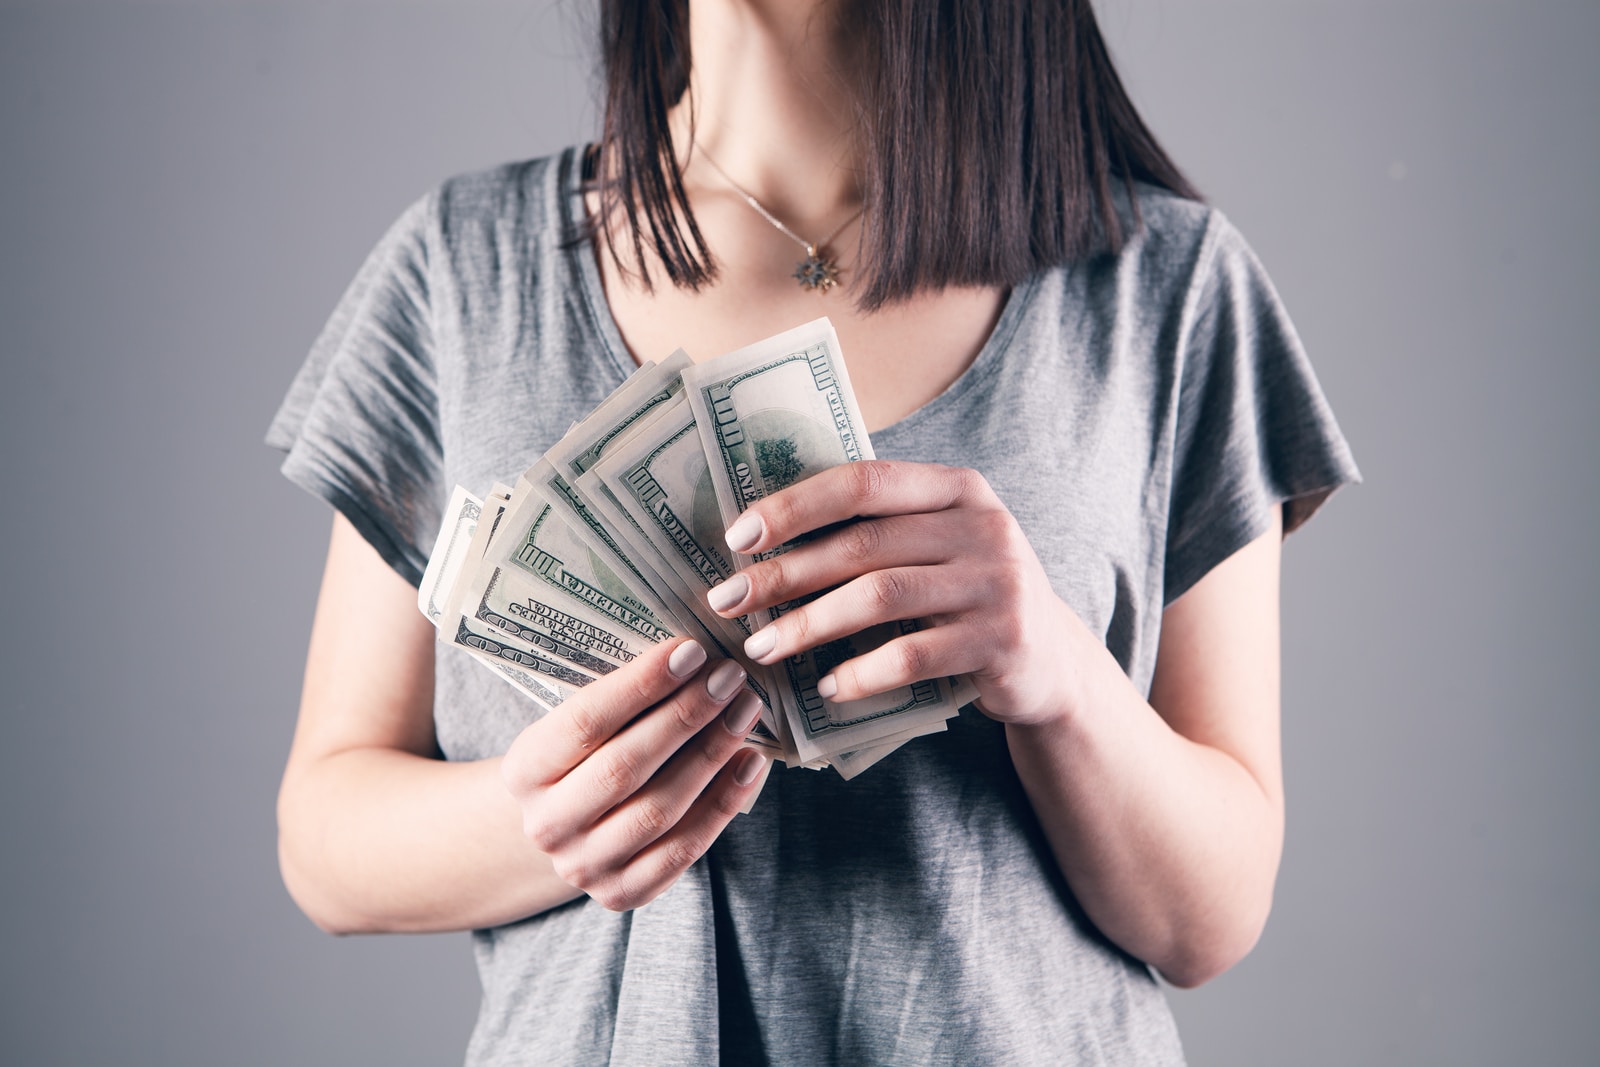 woman in gray shirt holding fan of us dollar bills